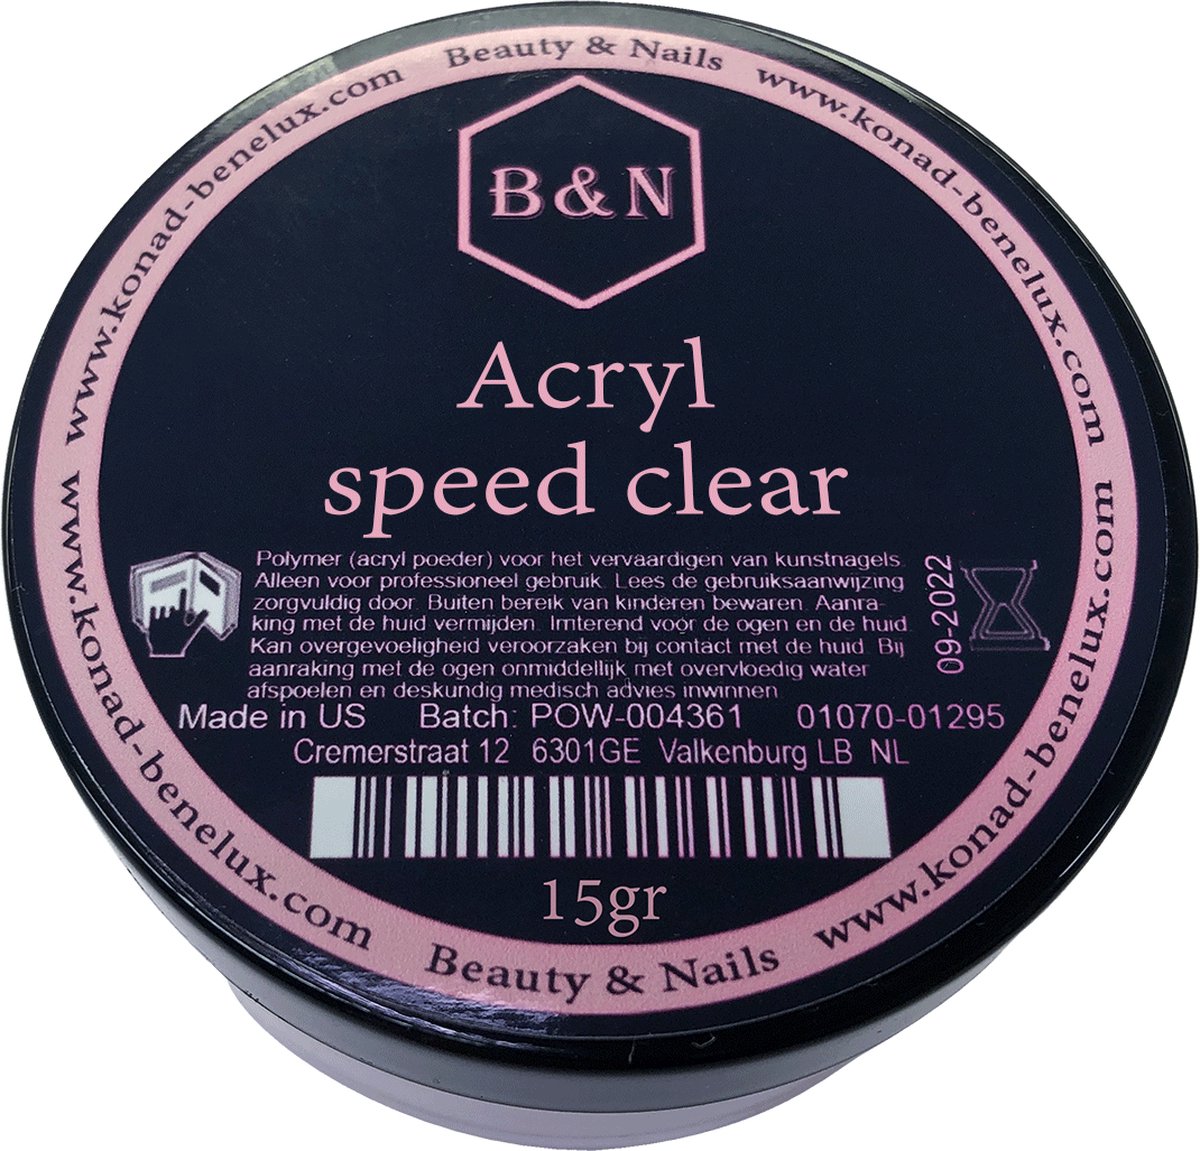 Acryl - speed clear - 15 gr | B&N - acrylpoeder - VEGAN - acrylpoeder